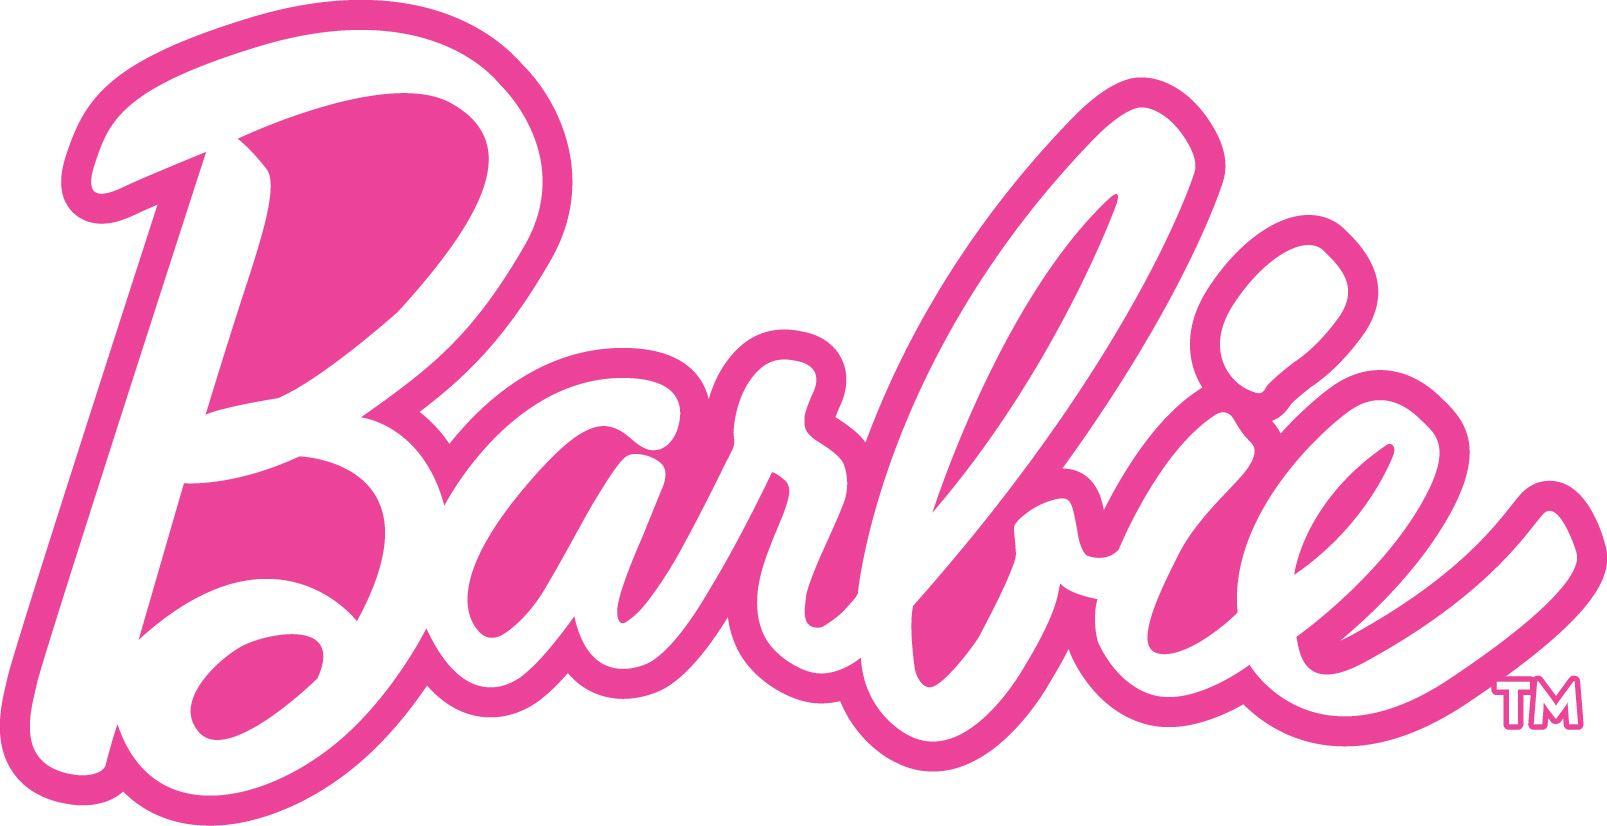 Barbie.com Logo - Image - Barbie-logo.jpg | Logopedia | FANDOM powered by Wikia